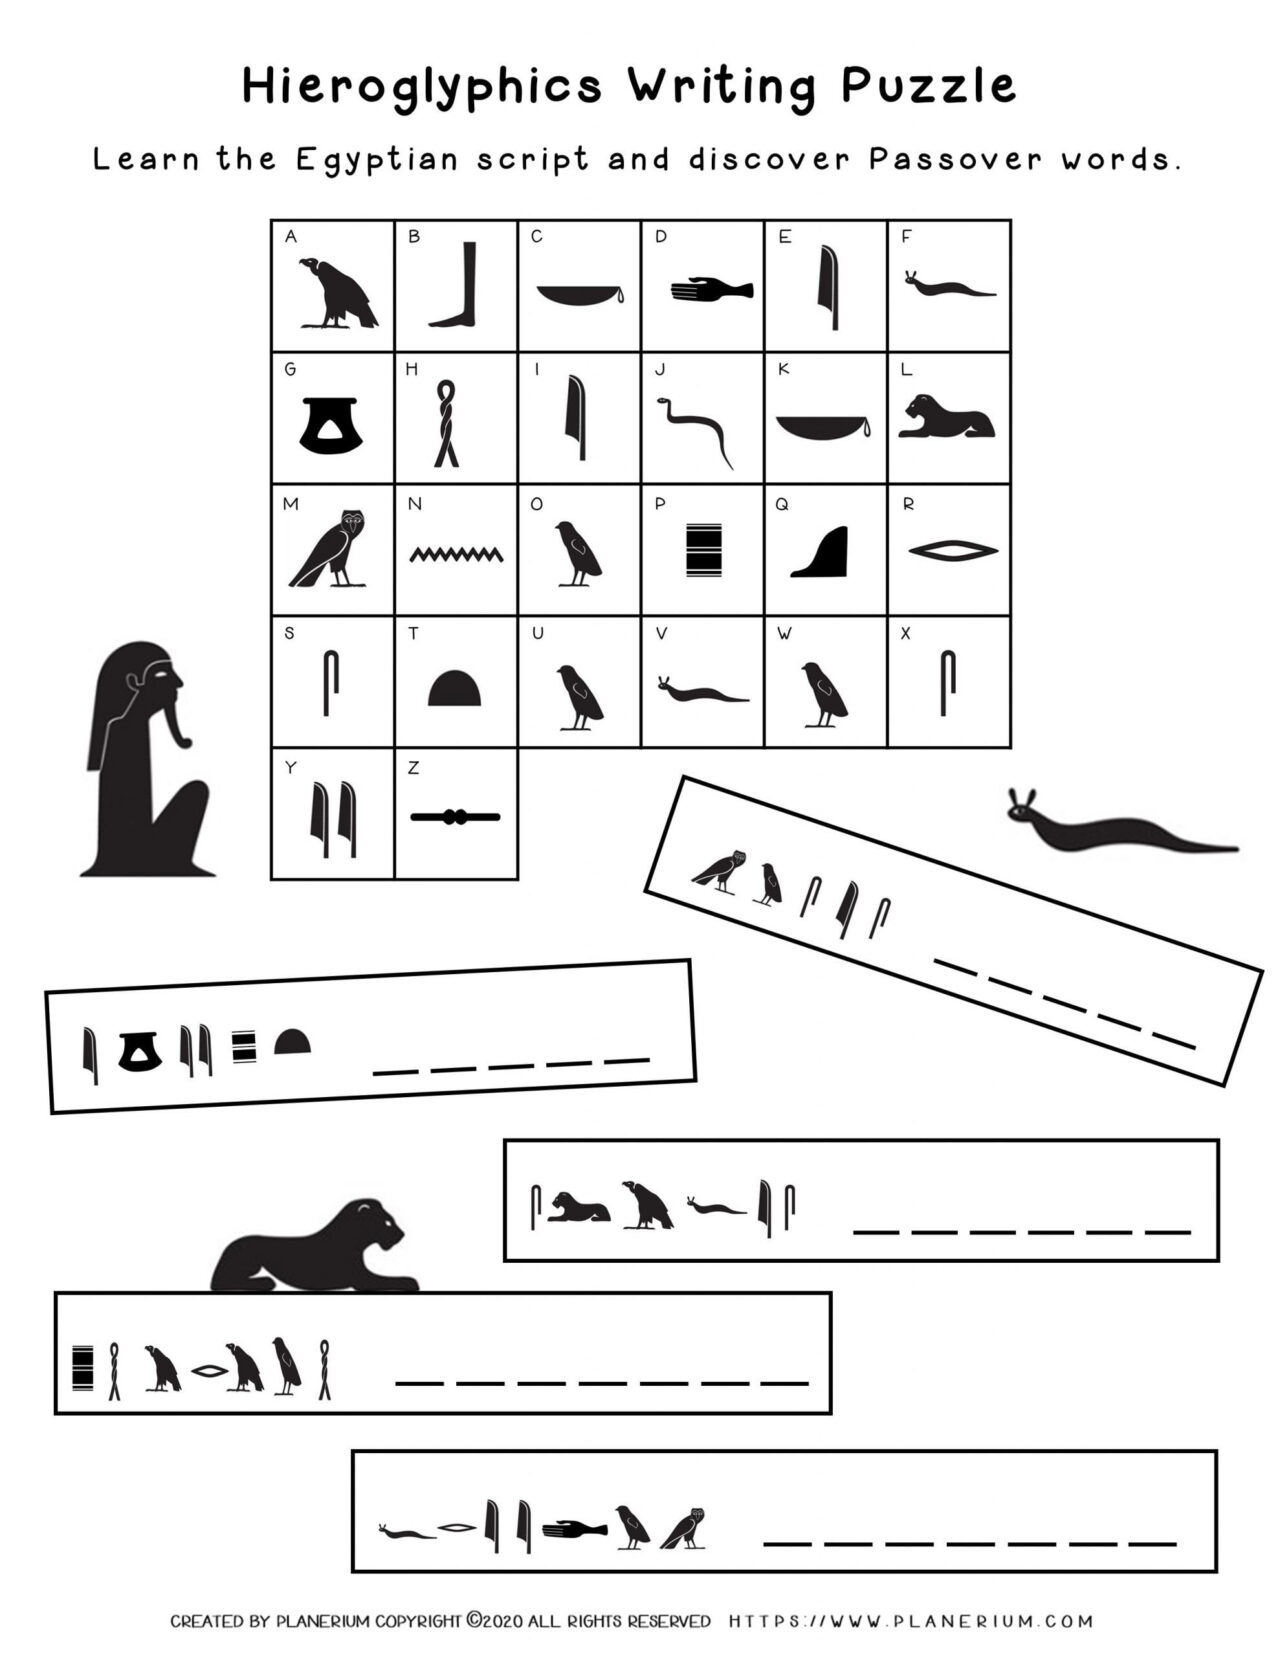 Passover worksheet - Hieroglyphics puzzle